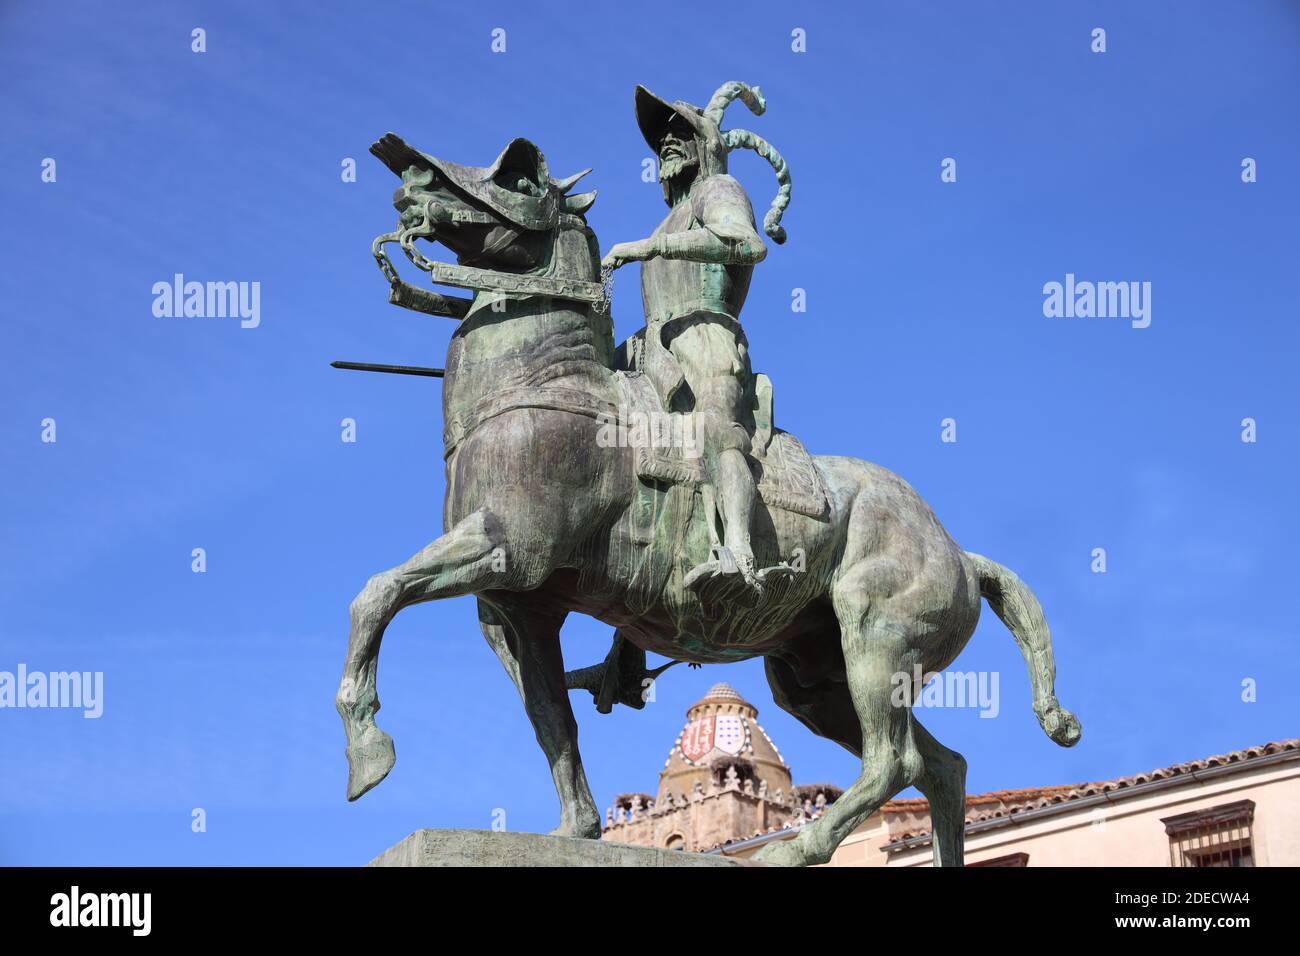 Trujillo. Plaza Major. Statue of Francisco Pizarro, conquistador of Peru. Province of Caceres, Extremadura, Spain. Renaissance/medieval architecture. Stock Photo